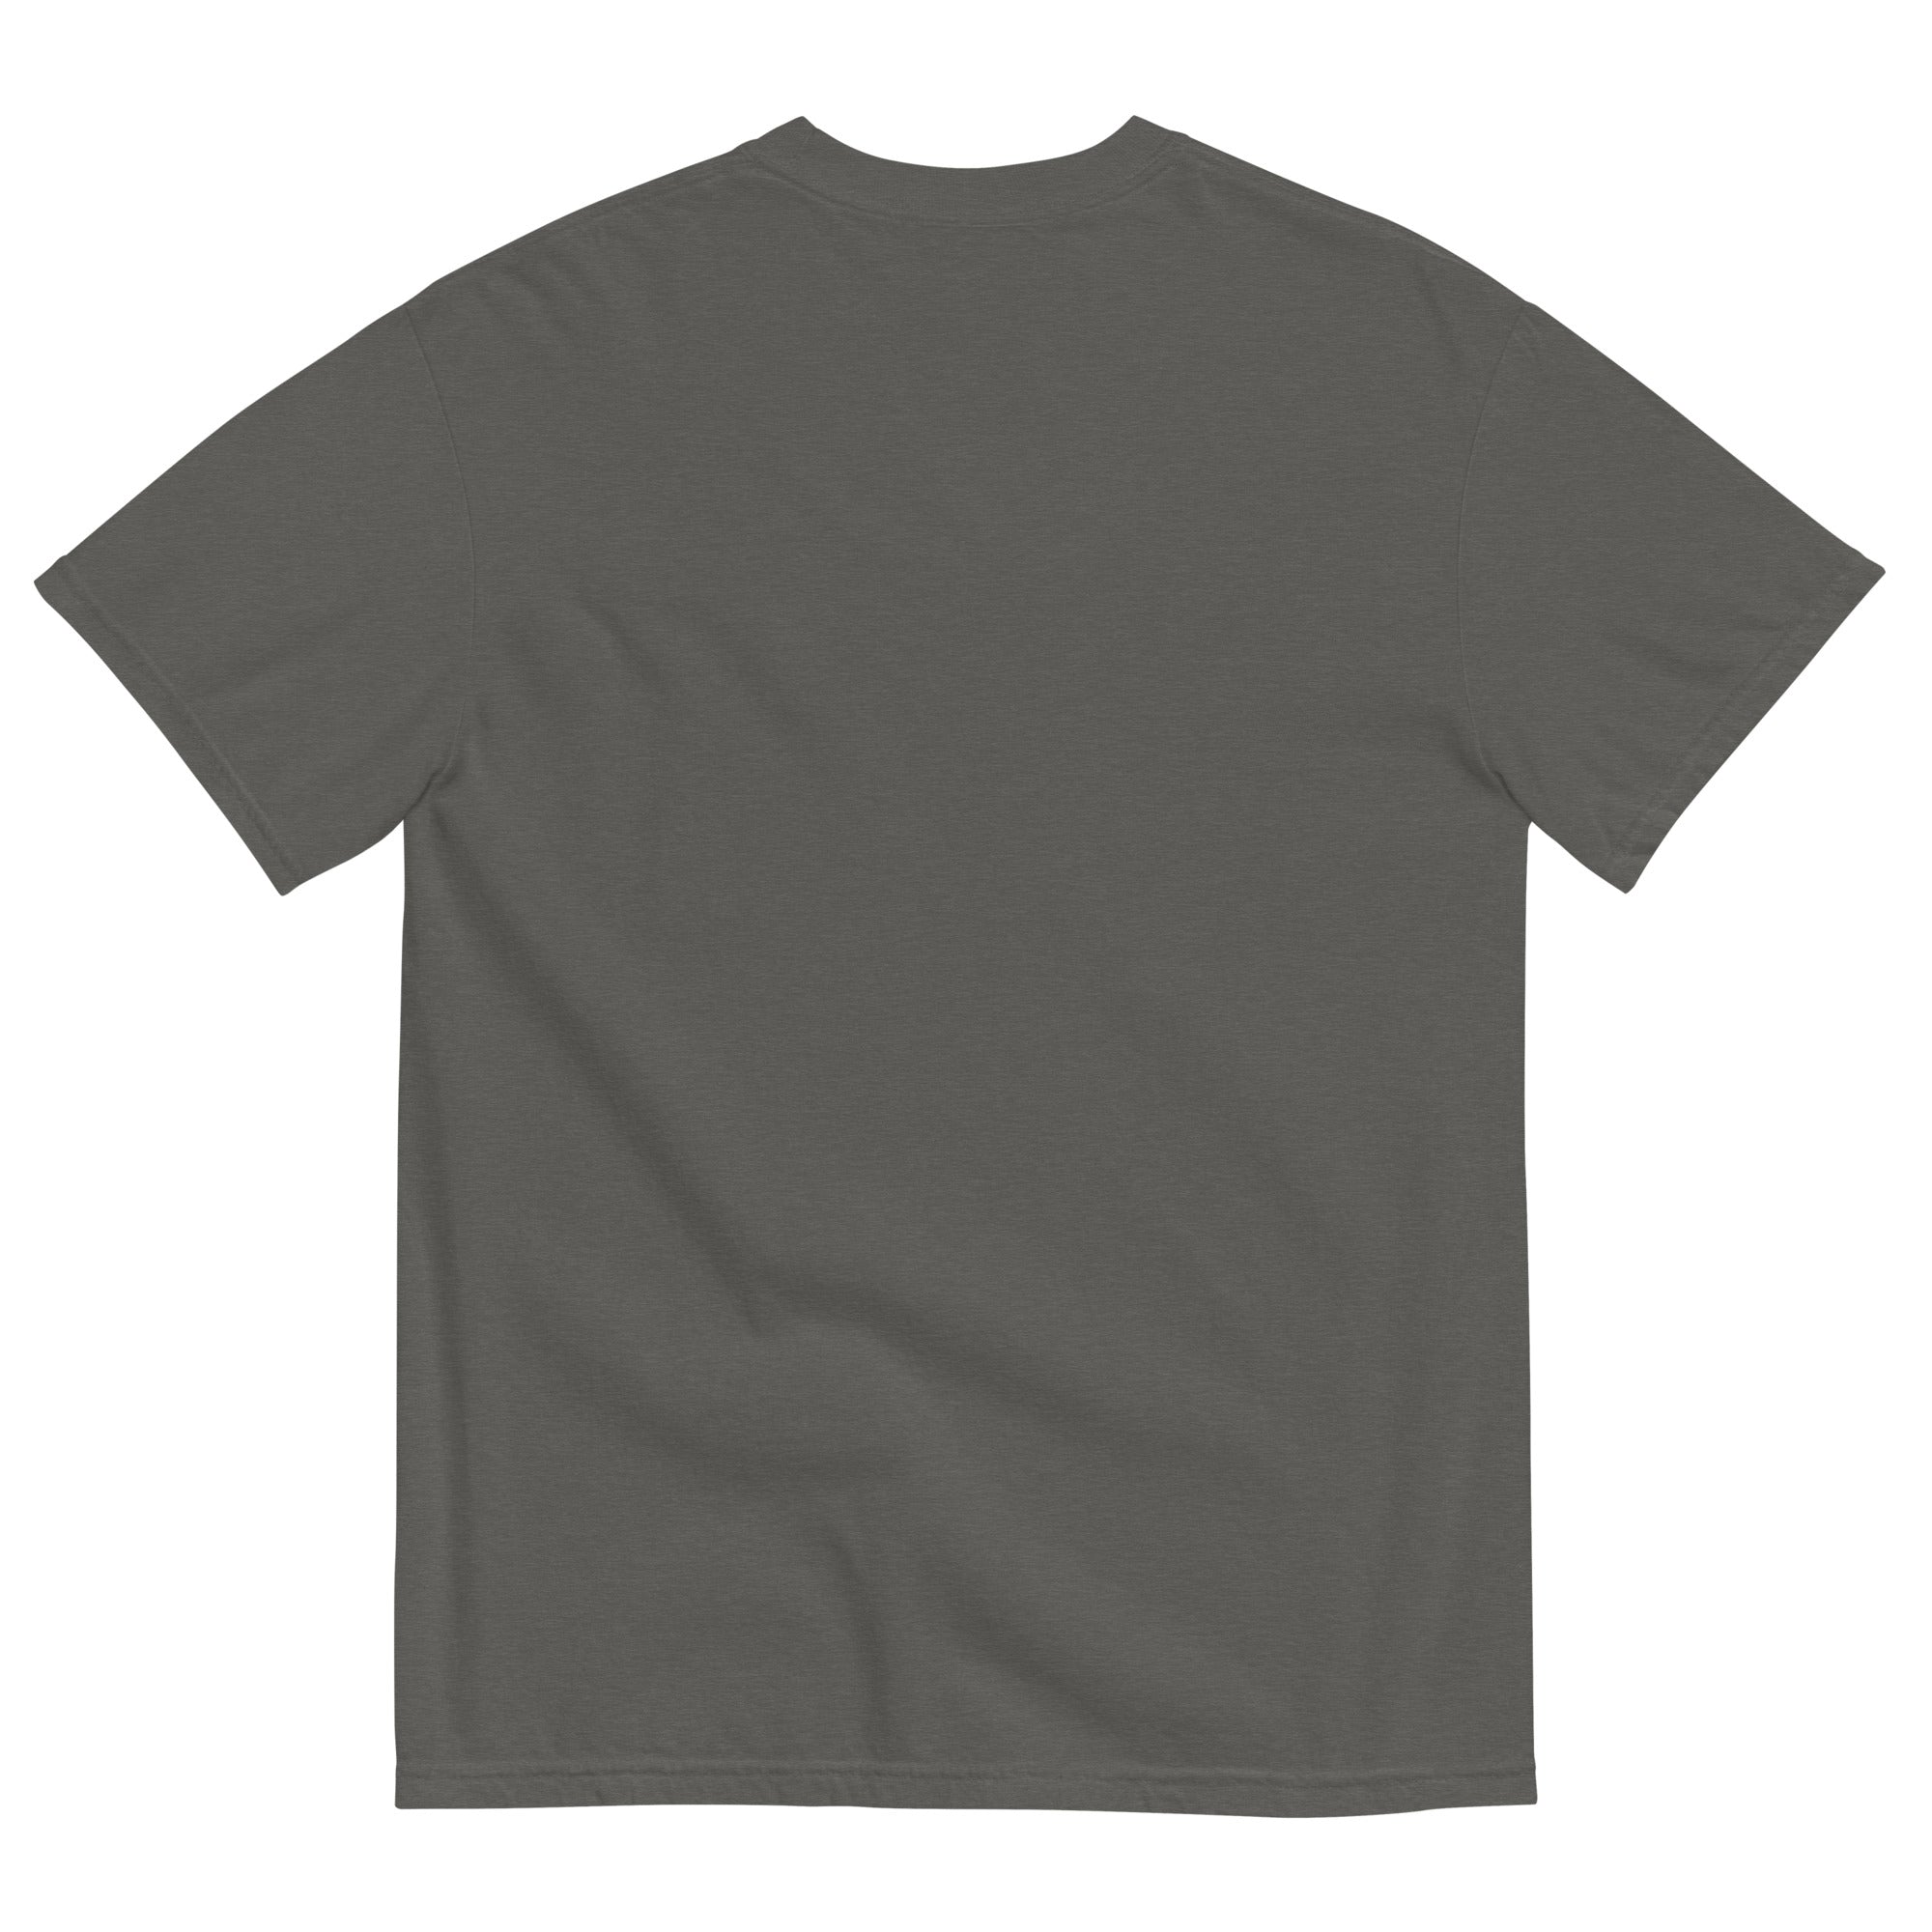 Vintage Relaxed Fit T-Shirt - Denver, CO